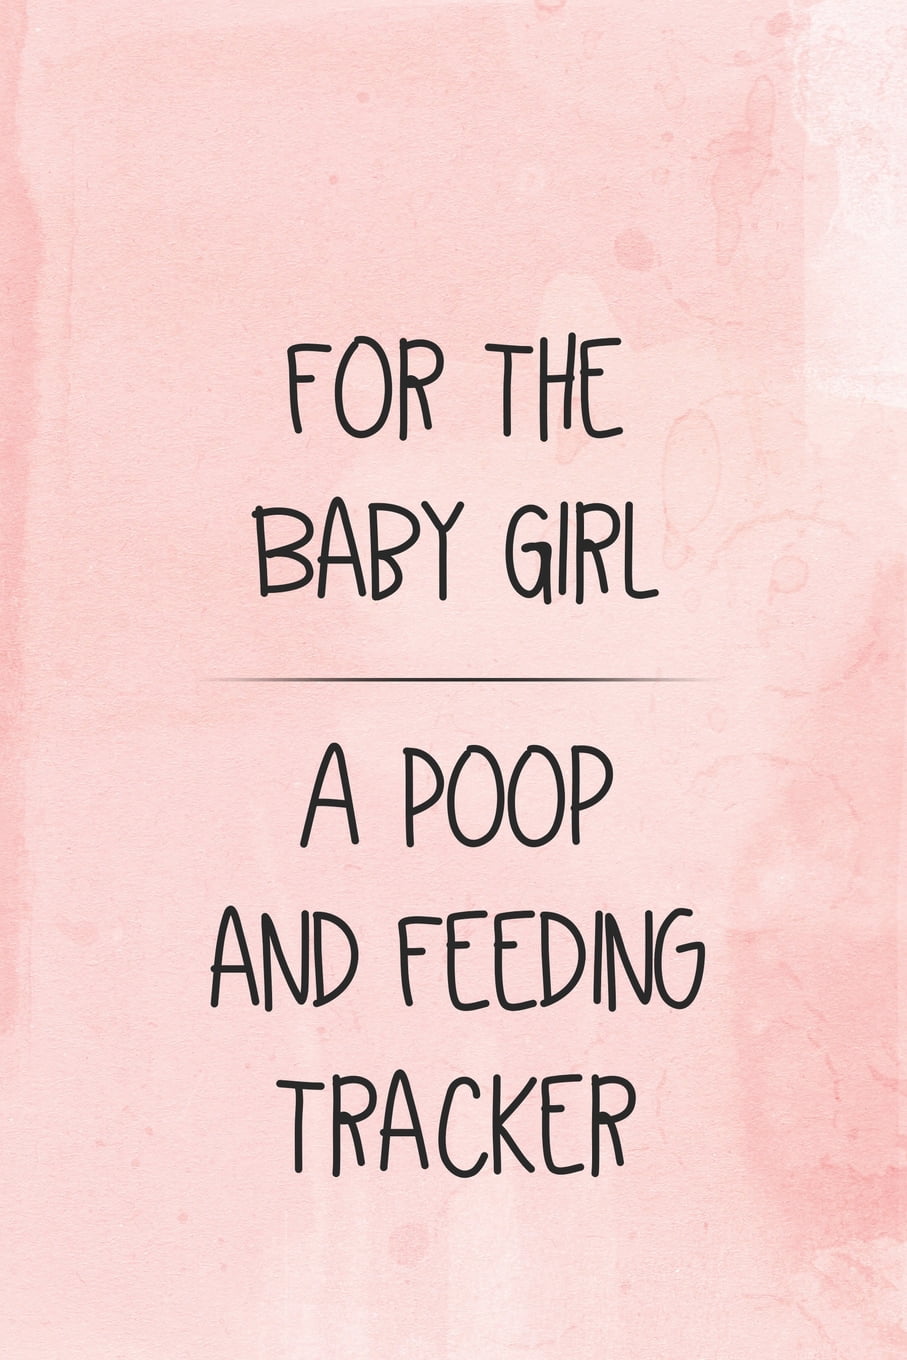 Girl Poops In Diaper